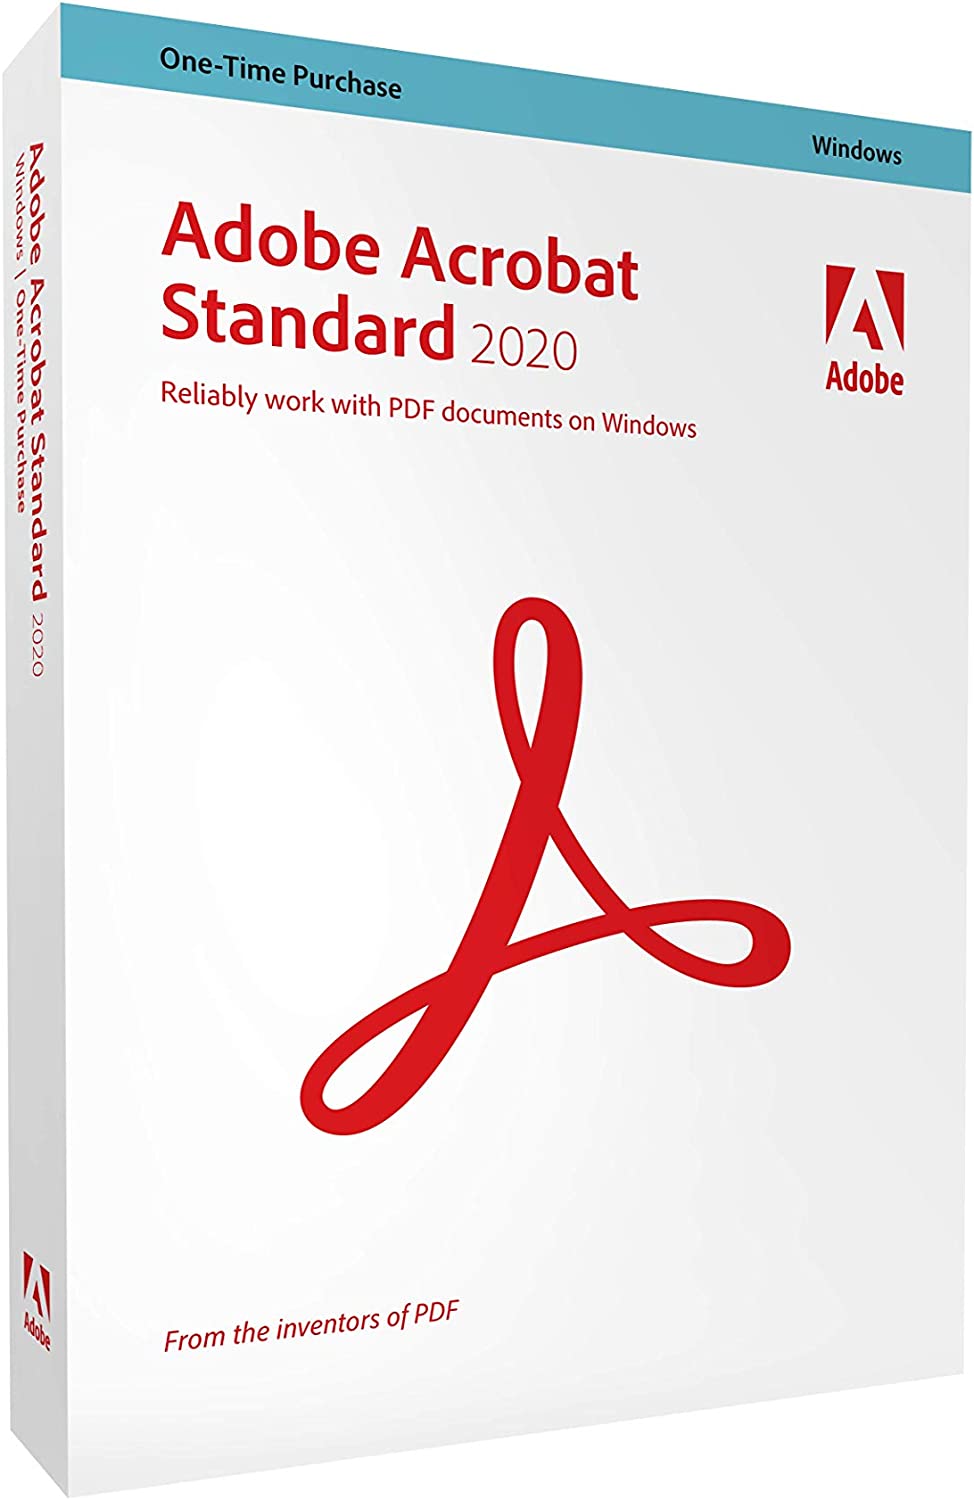 Adobe Acrobat Standard 2020 - Windows Download $339 w/ Promo Code $338.80